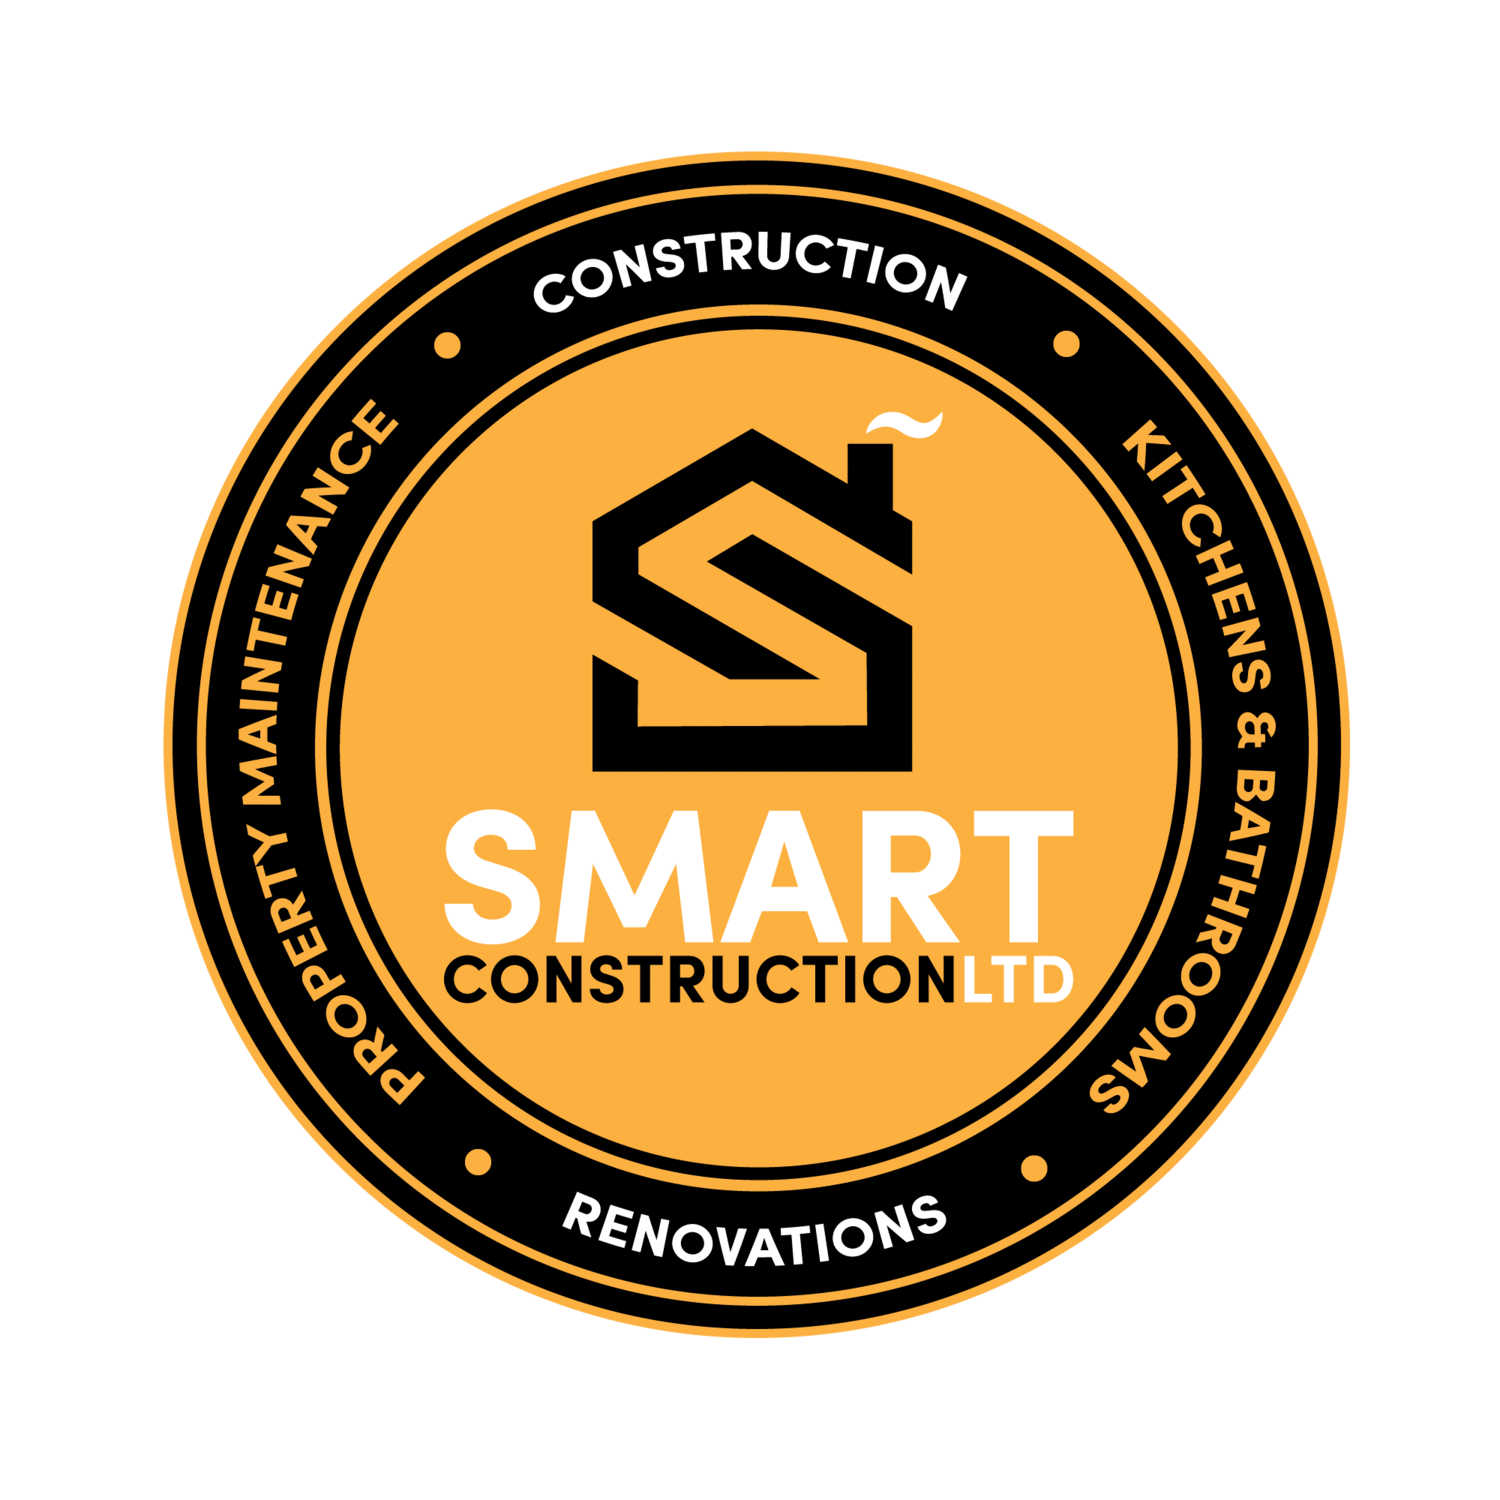 Smart Construction Ltd